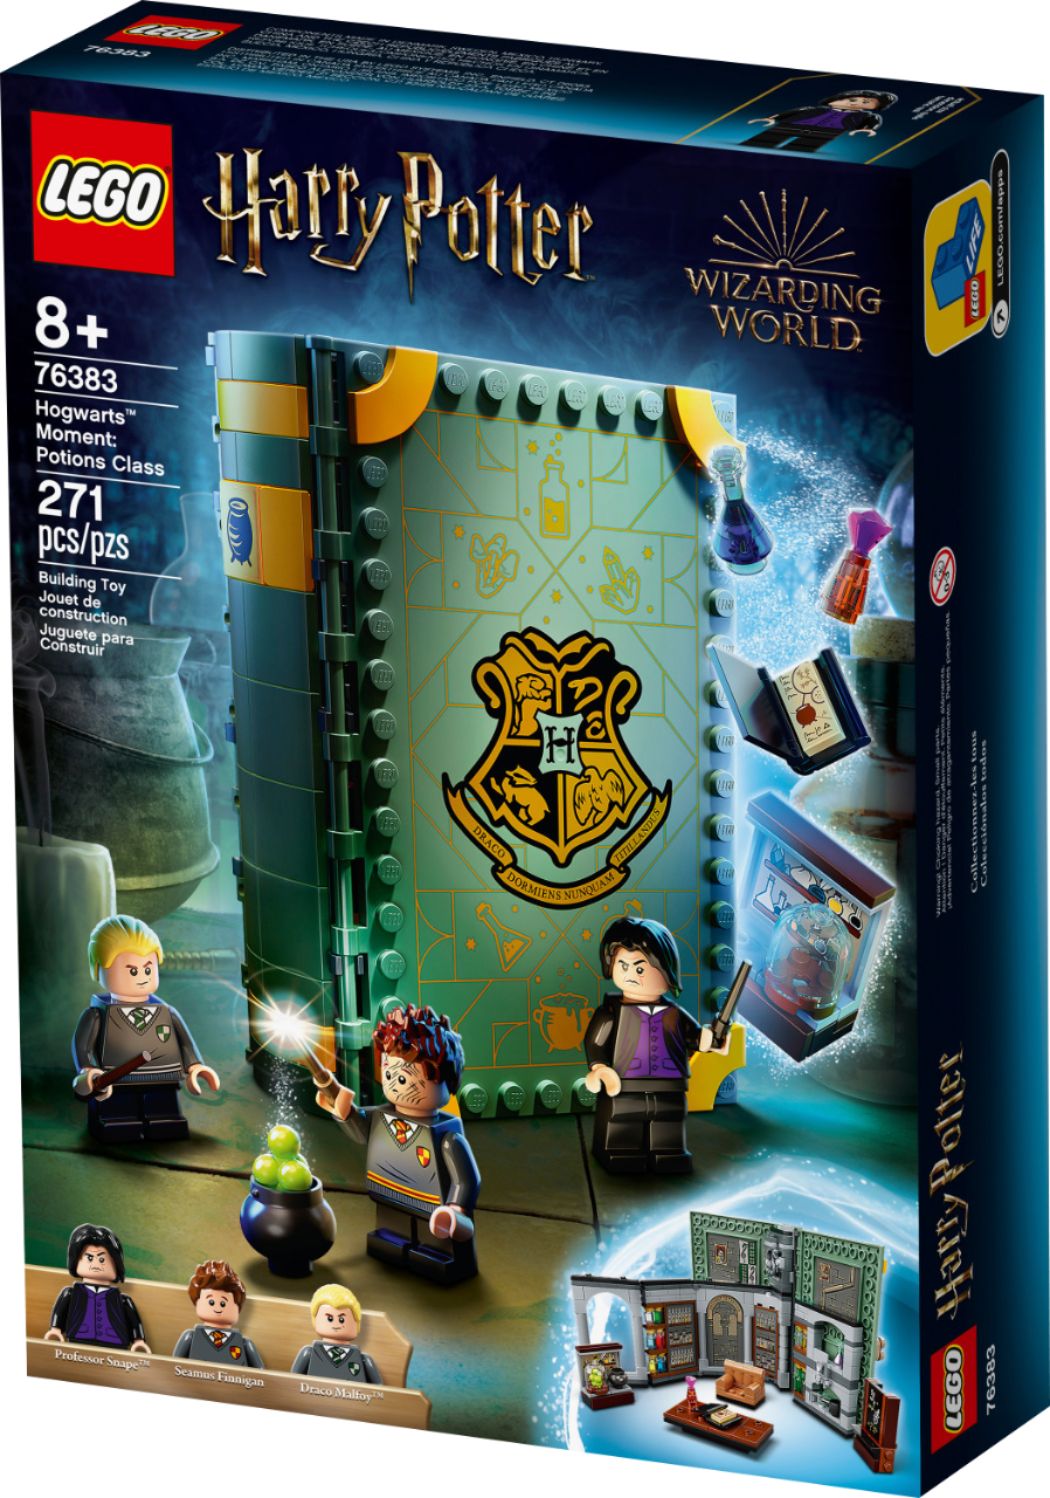 Lego 76383  Harry Potter Hogwarts Moment  Potions Class  